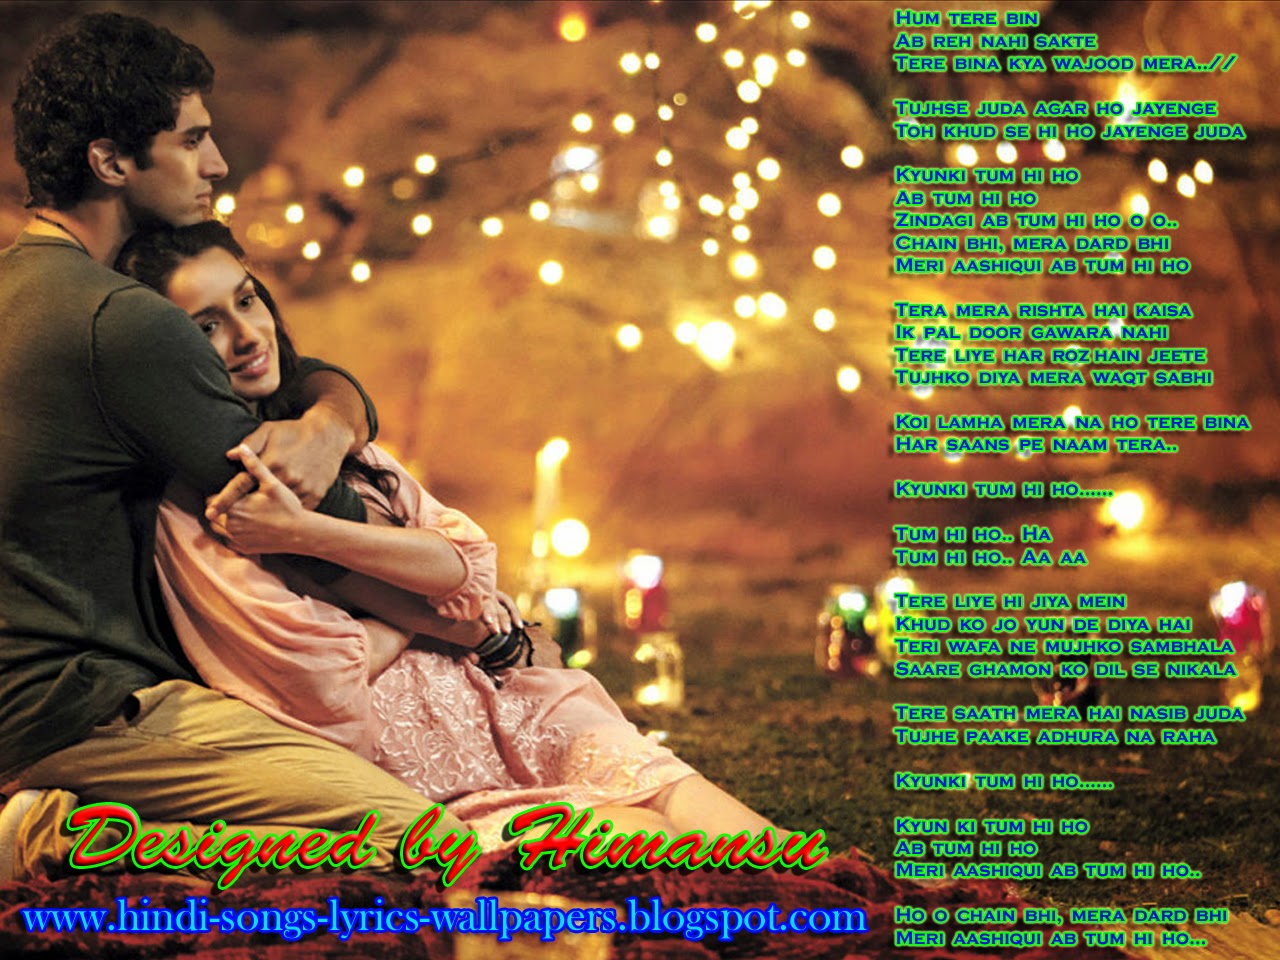 Hindi Songs Lyrics Wallpapers